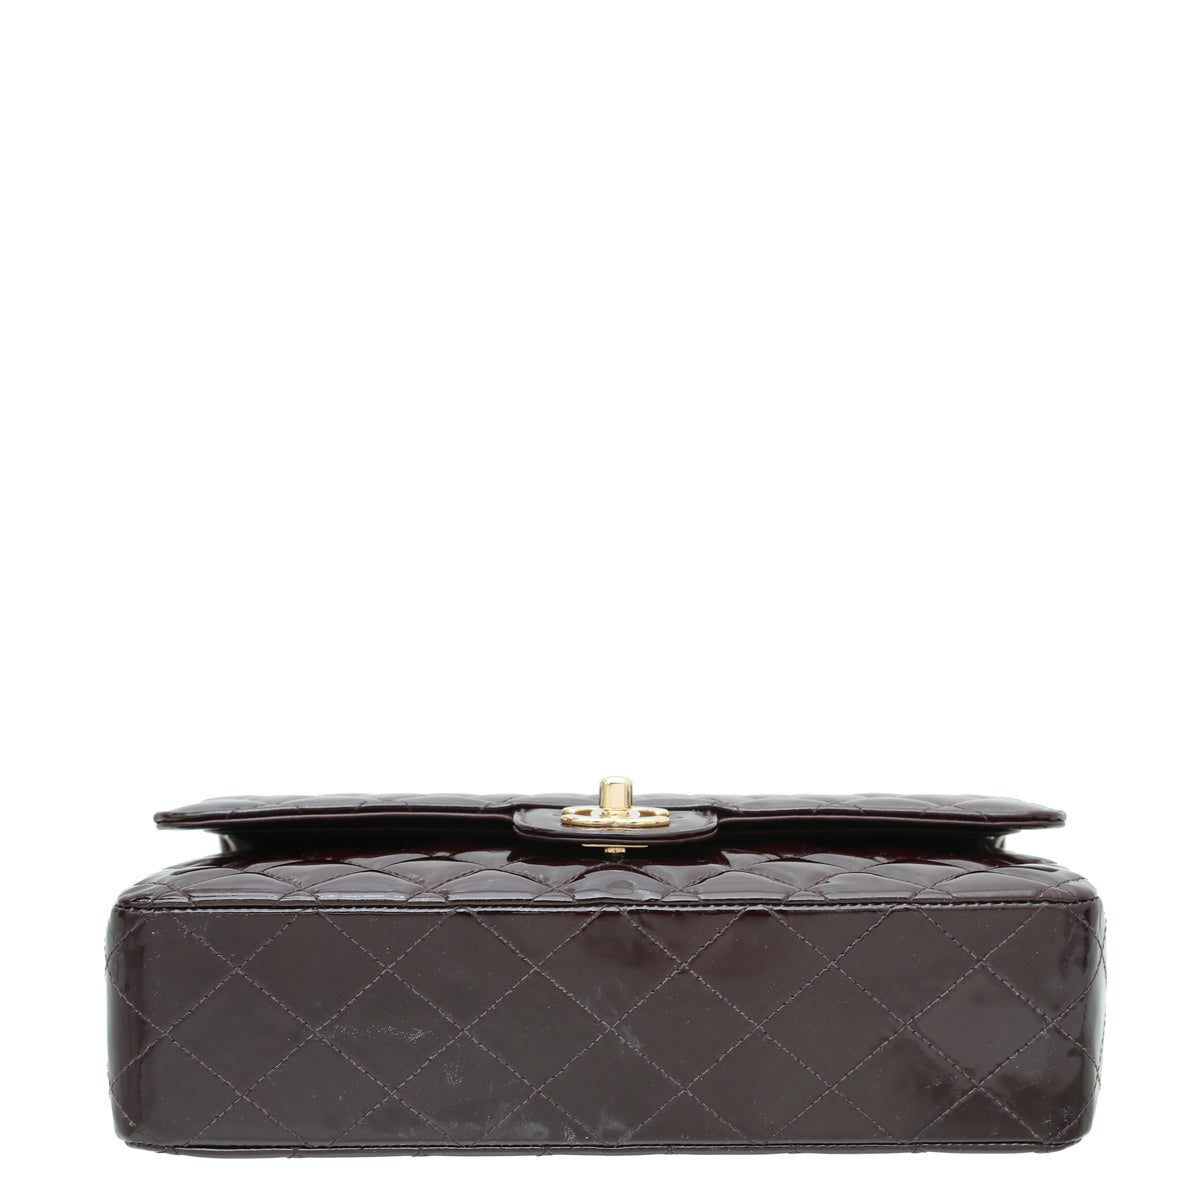 Chanel Burgundy CC Classic Double Flap Medium Bag